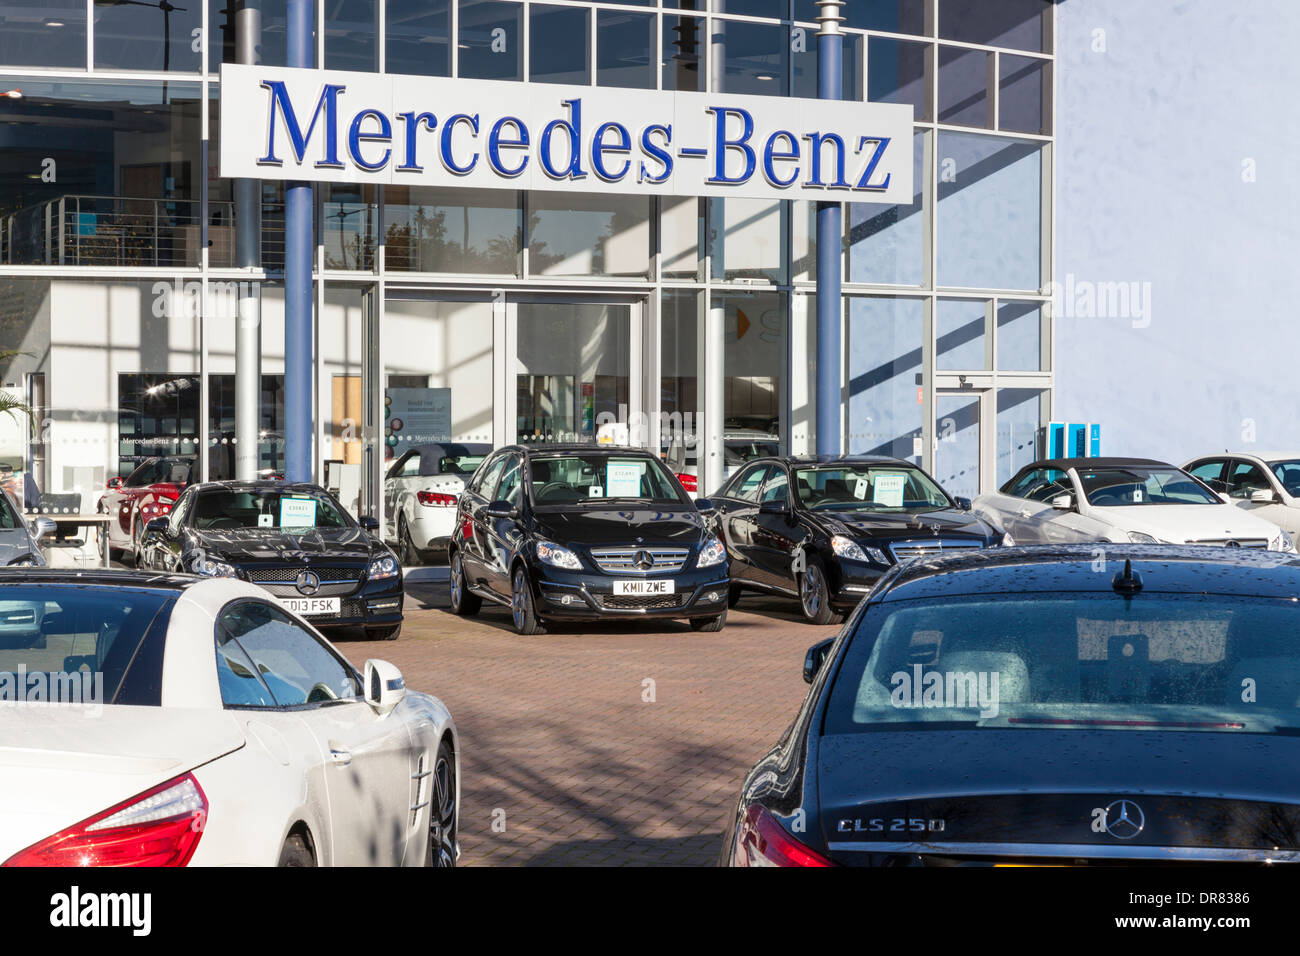 Mercedes-Benz dealership. Car showroom and forecourt, Nottingham, England, UK Stock Photo